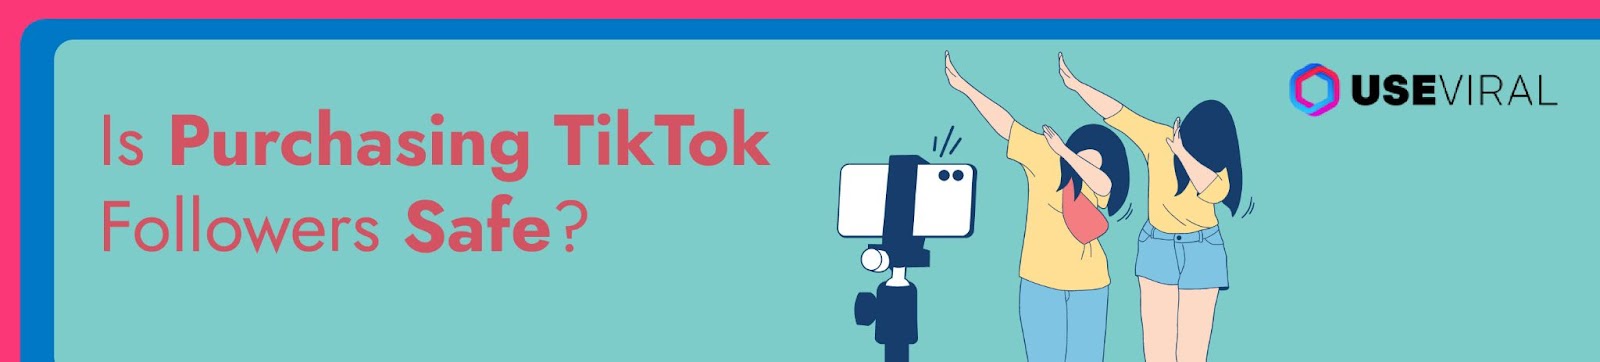 Is Purchasing TikTok Followers Safe?